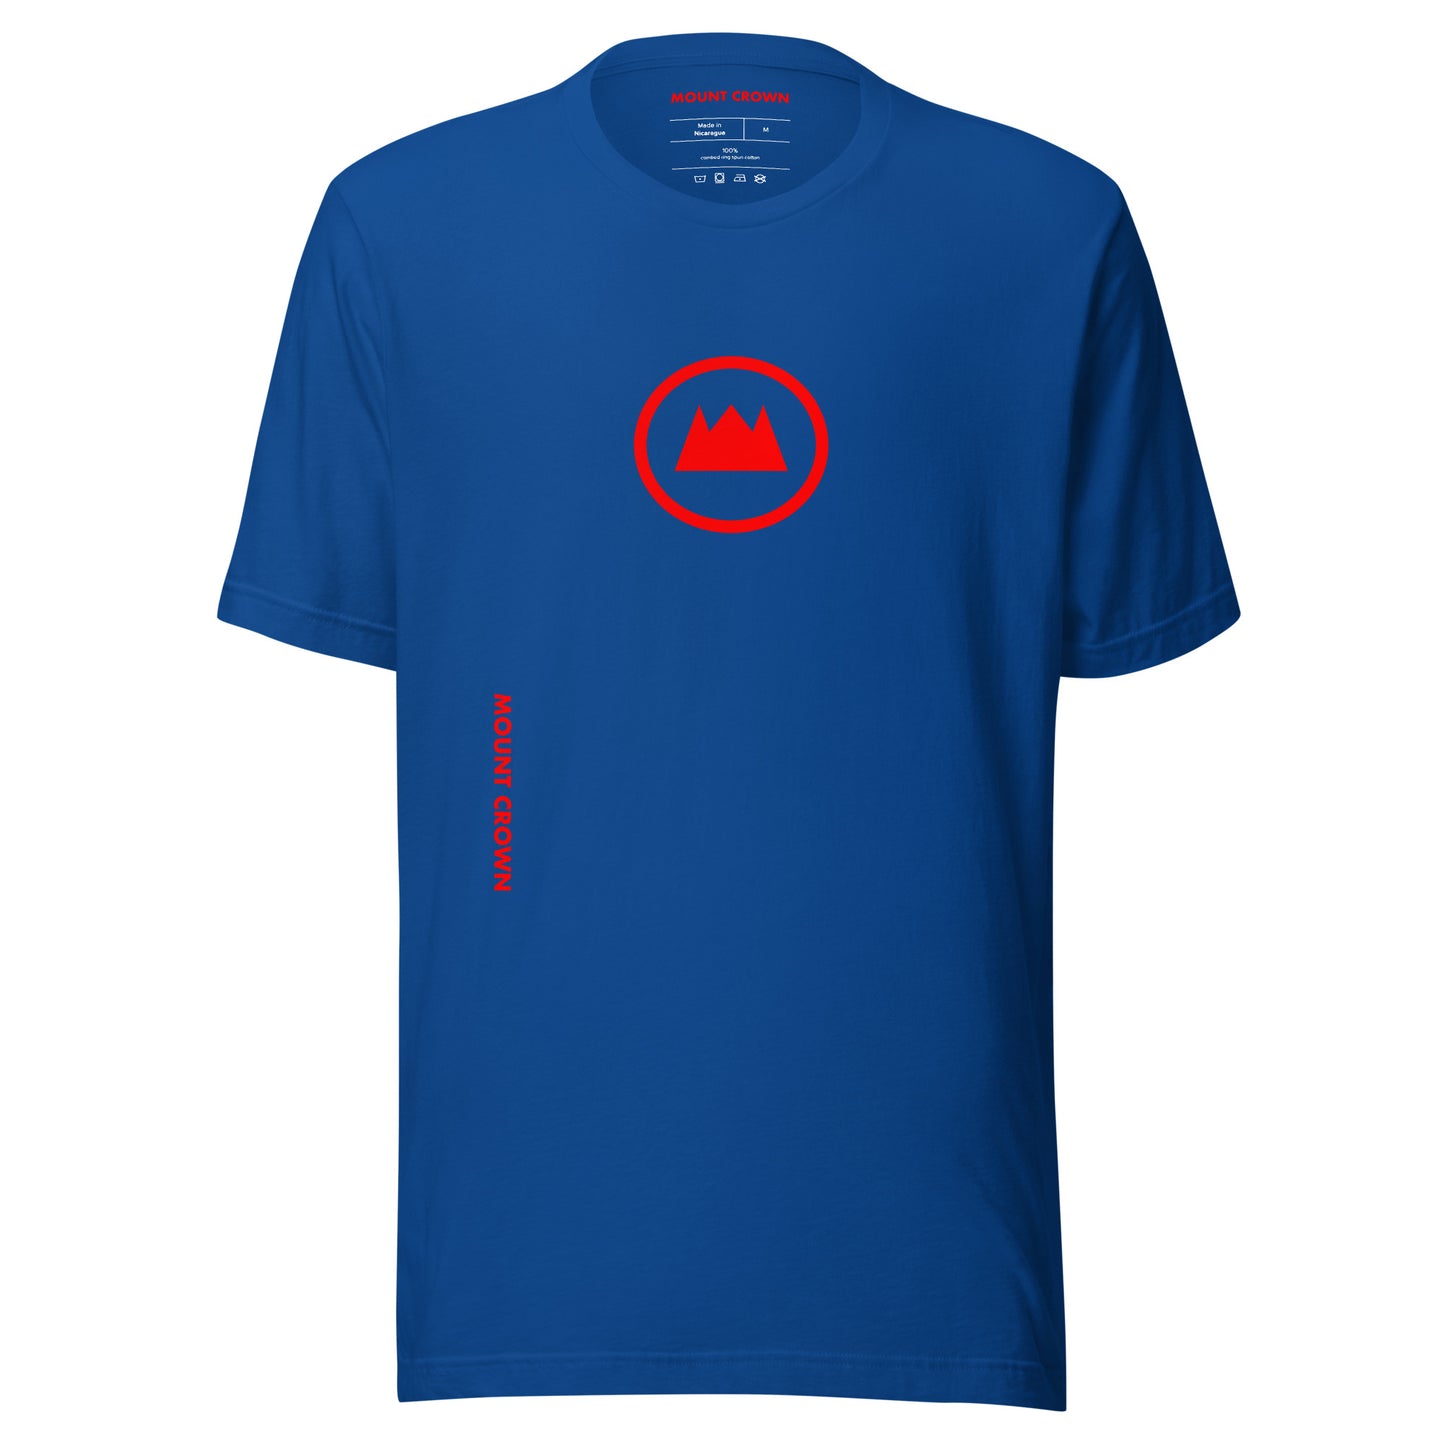 MOUNT CROWN (R) Unisex T-shirt